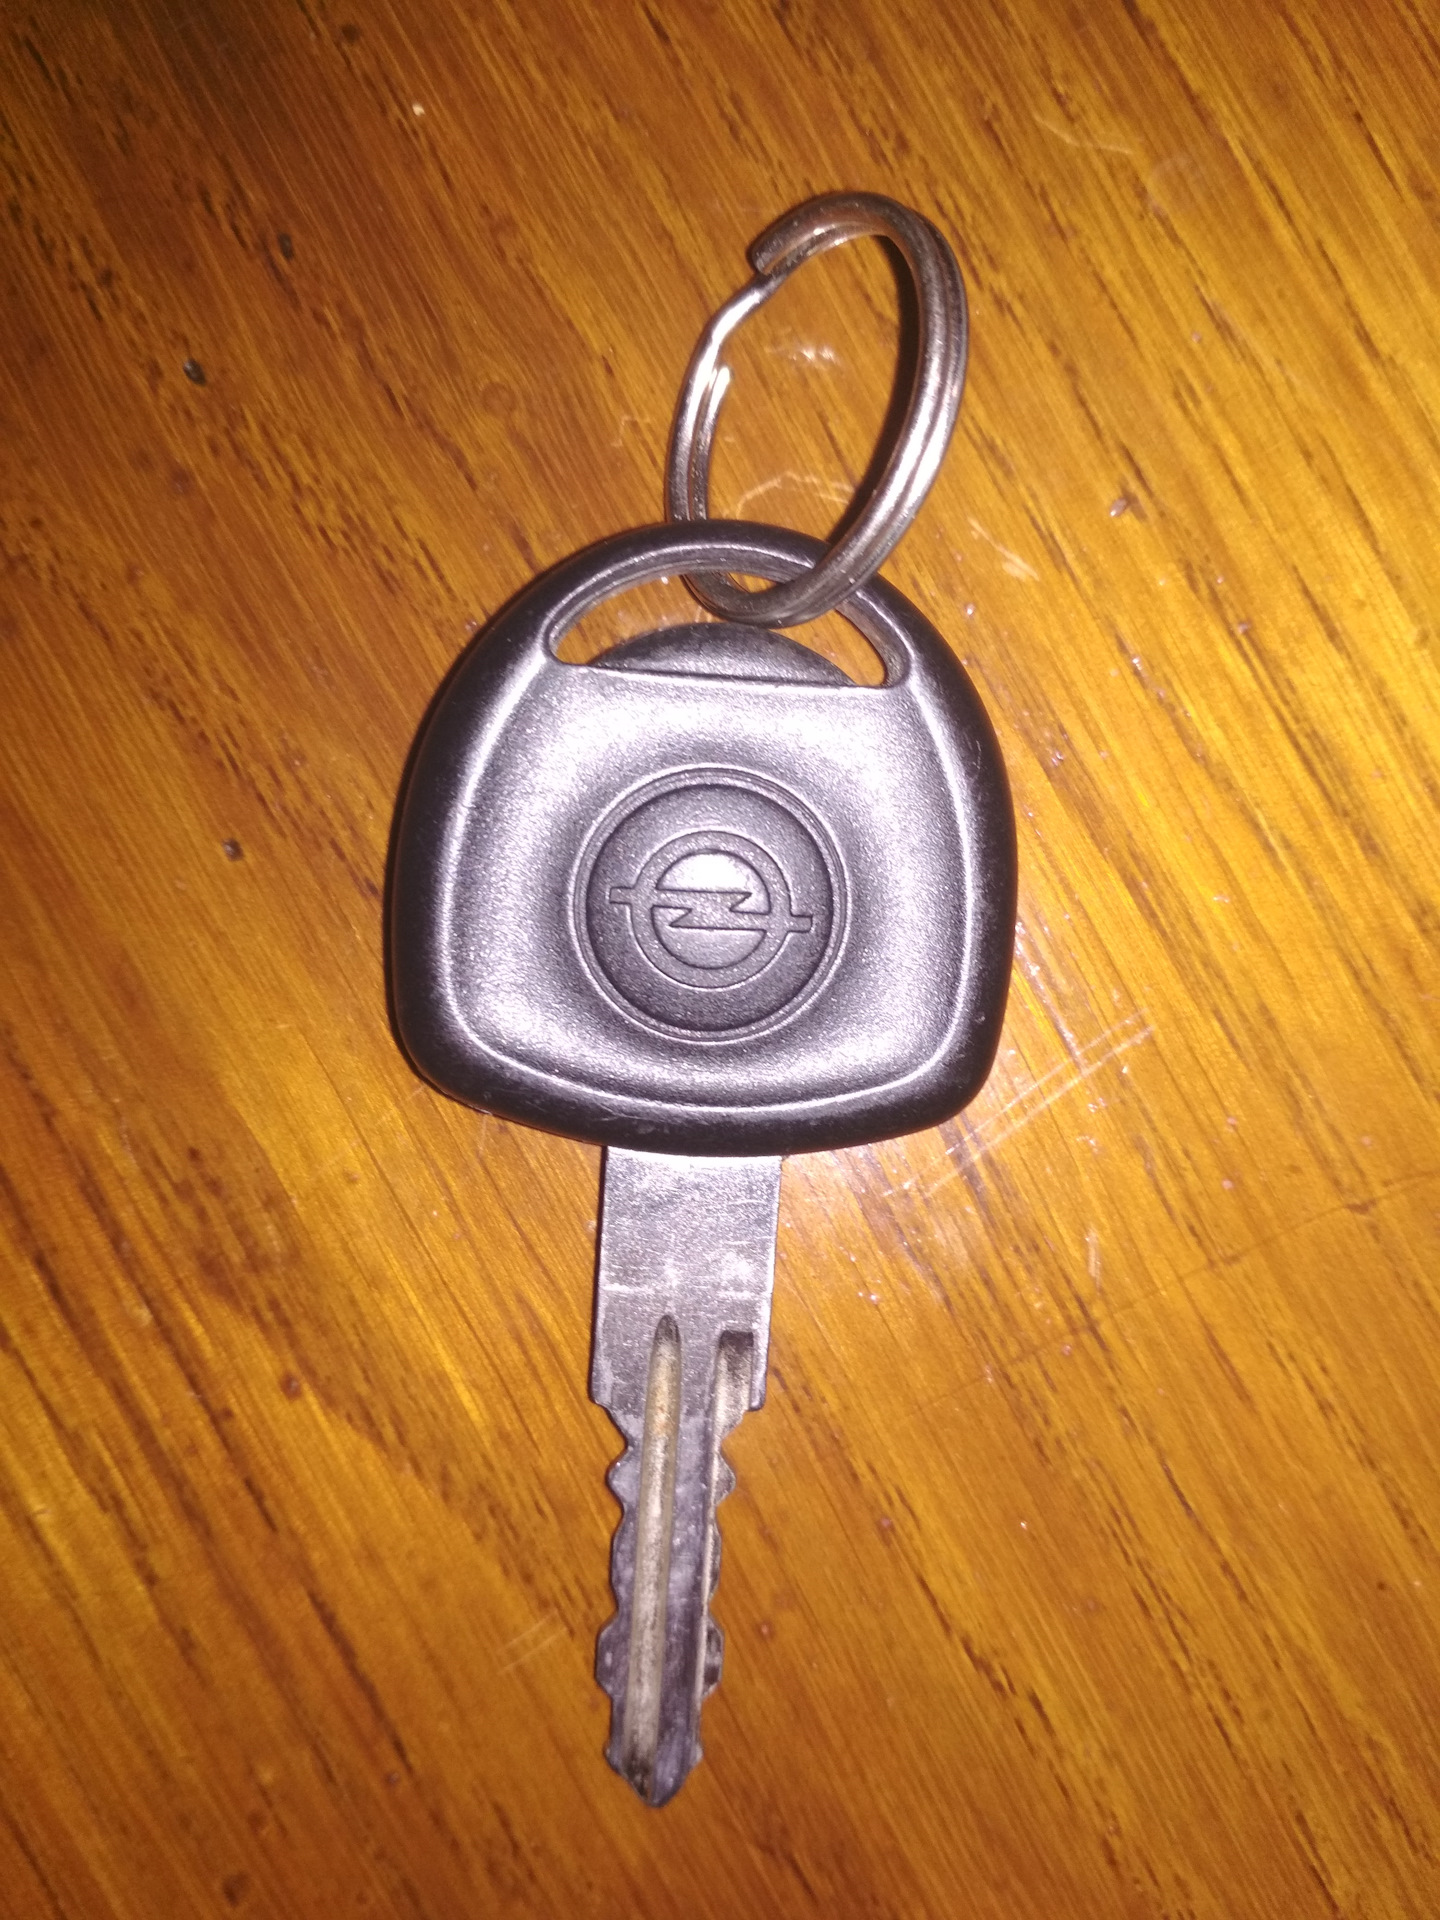 Ключ вектра б. Ключ Опель Вектра б 1999. Ключ Opel Vectra b 1999. Ключ Опель Вектра б. Ключ от Опель Вектра б.